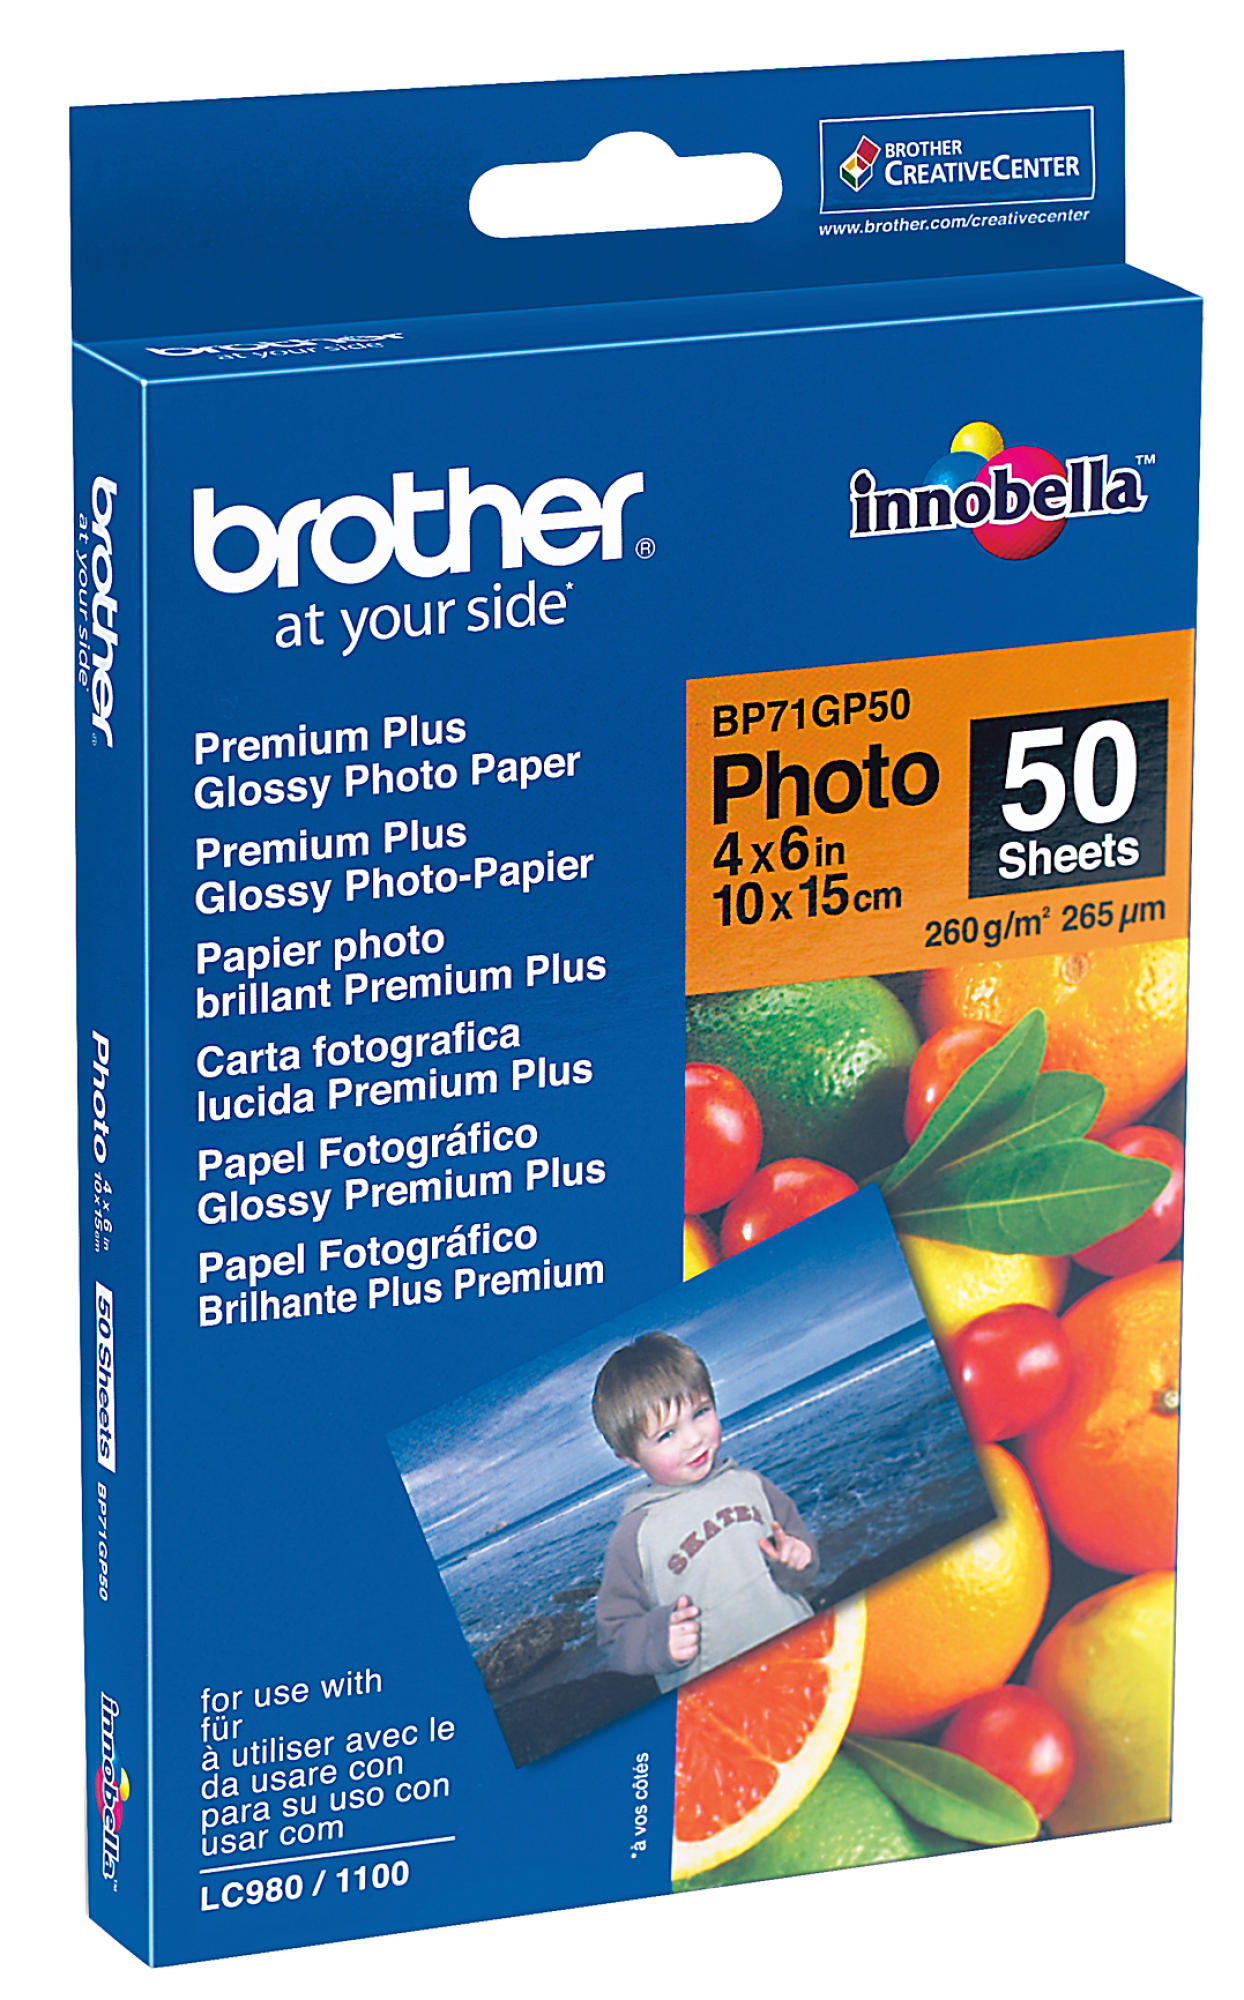 BROTHER BP 71 GP50 71 Fotopapier GP50 Fotopapier BP 10x15 A6 Brother